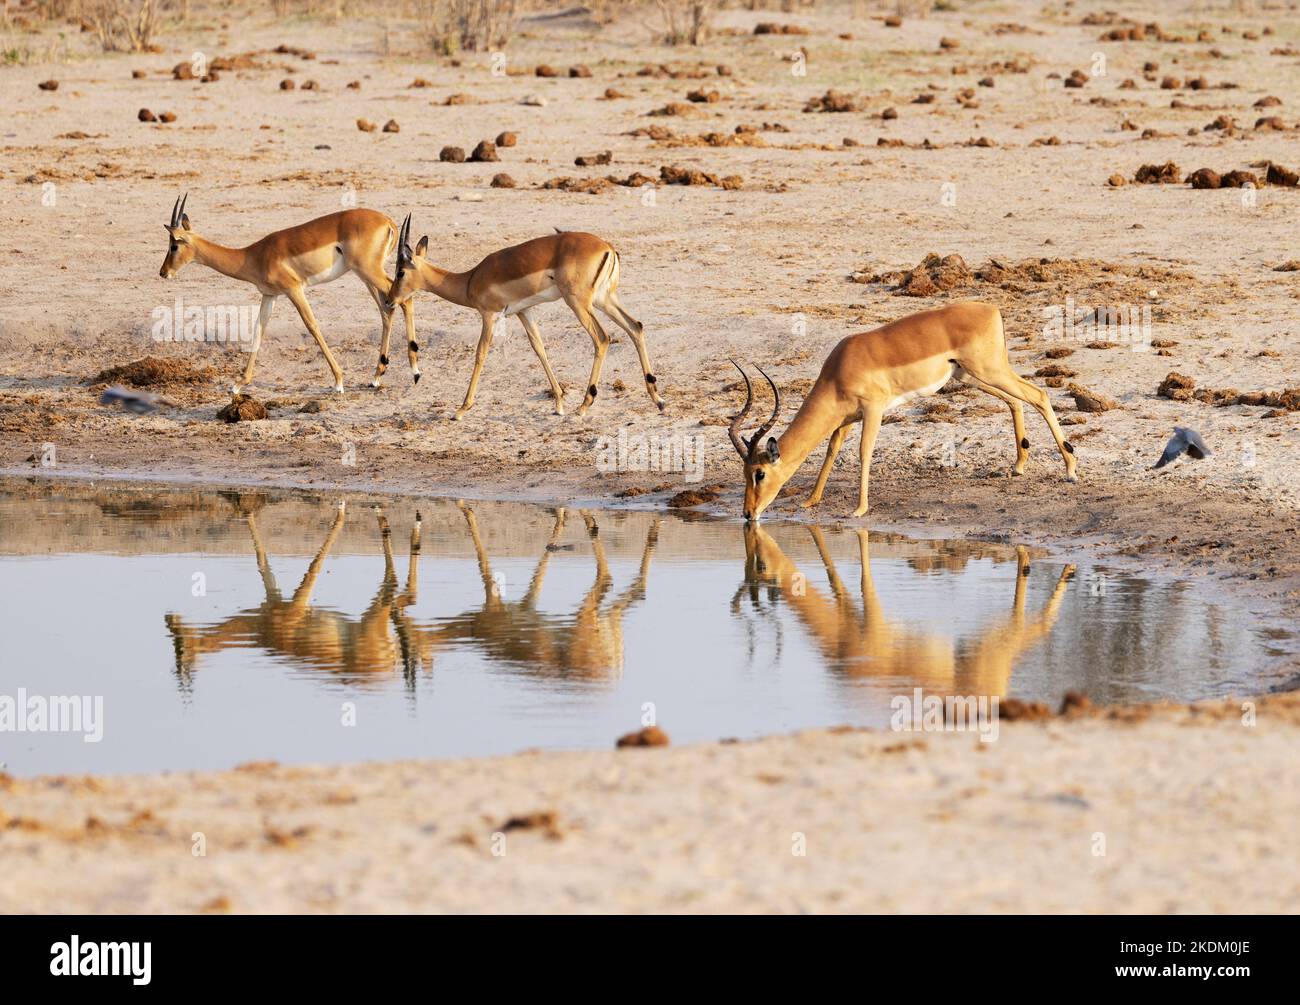 Impalas ( Aepyceros melampus )drinking from a waterhole with reflection, Chobe National Park Botswana Africa. African animal Stock Photo